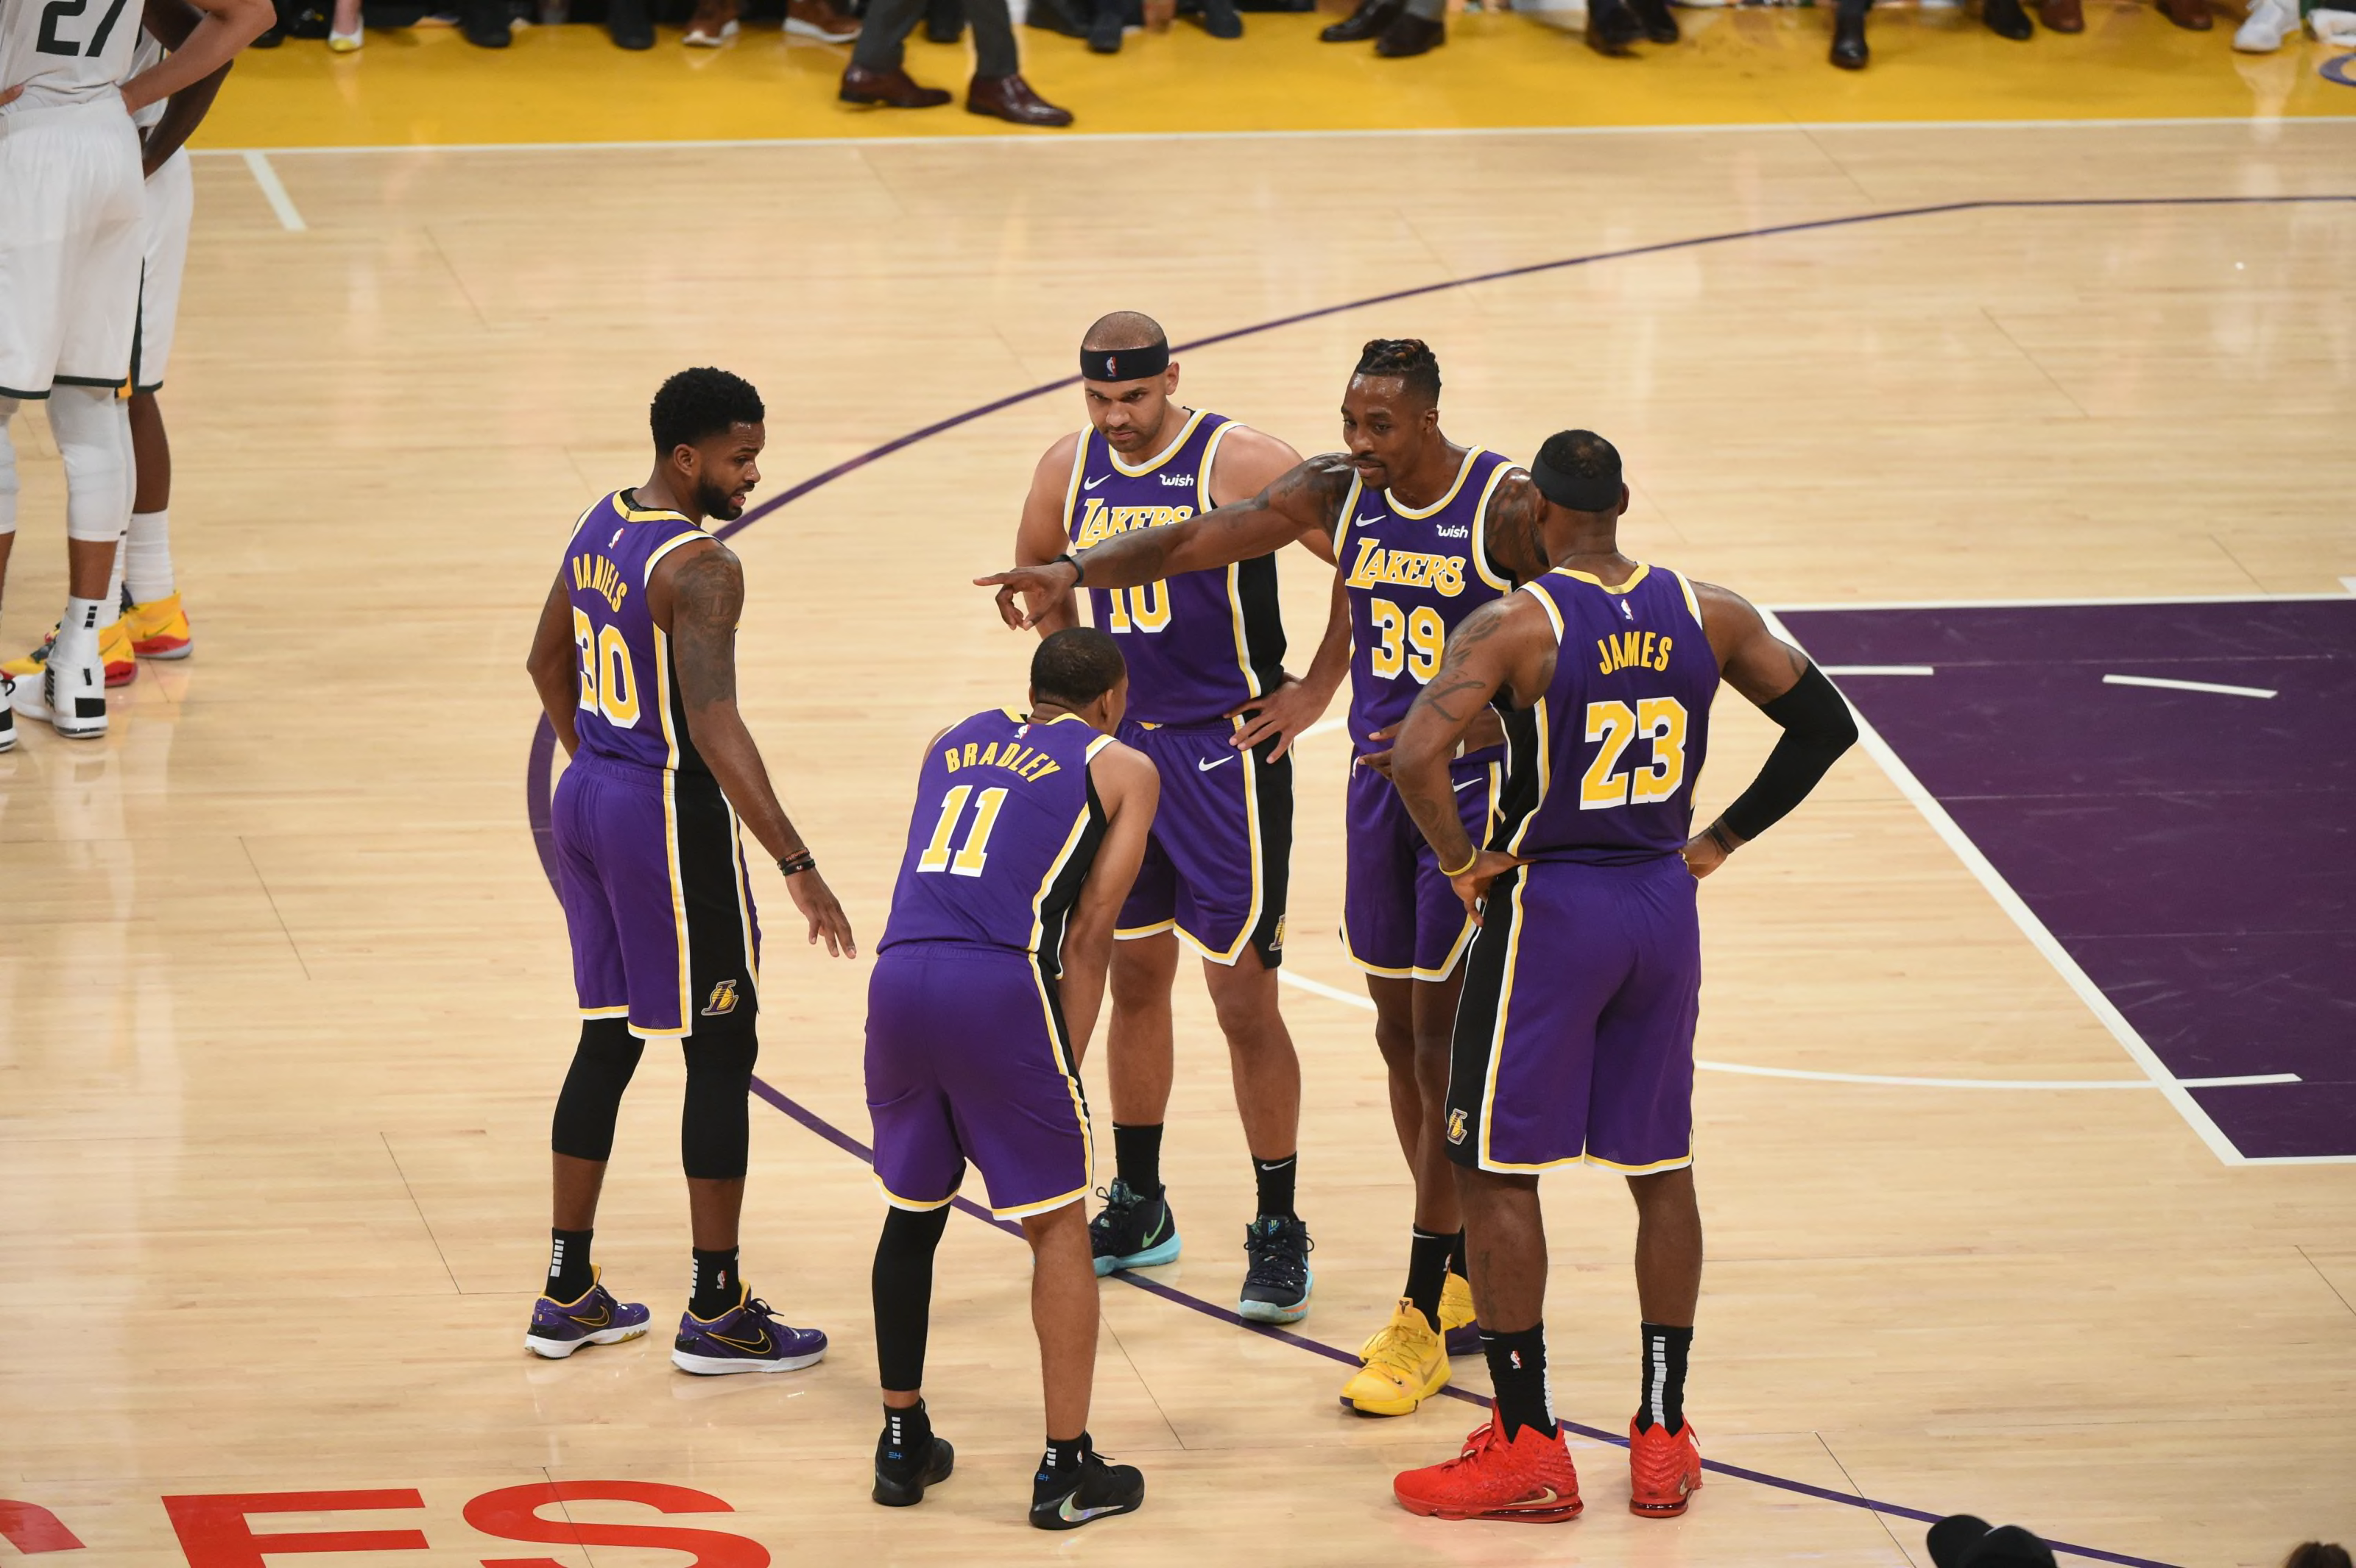 Lakers vs jazz